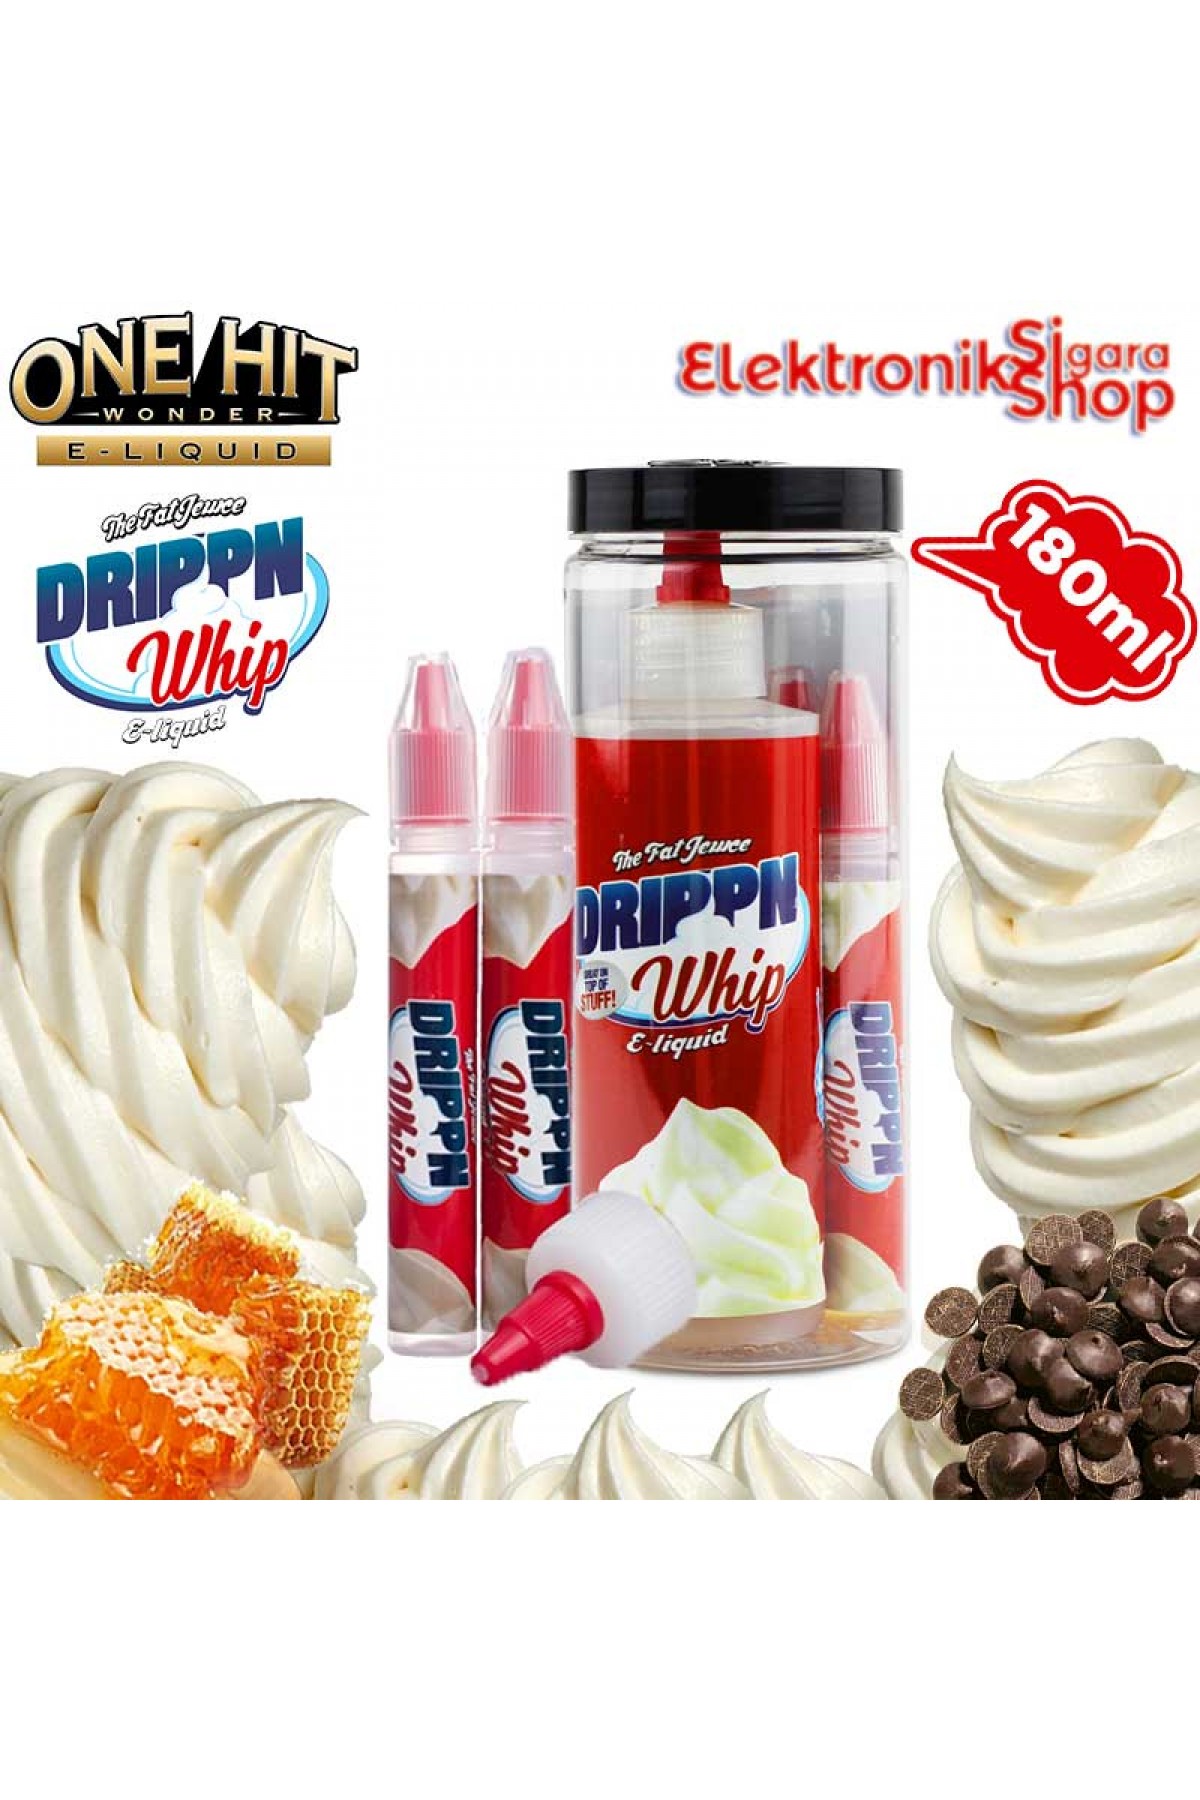 One Hit Wonder Drippin Whip Premium Elektronik Sigara Likiti (180ml)